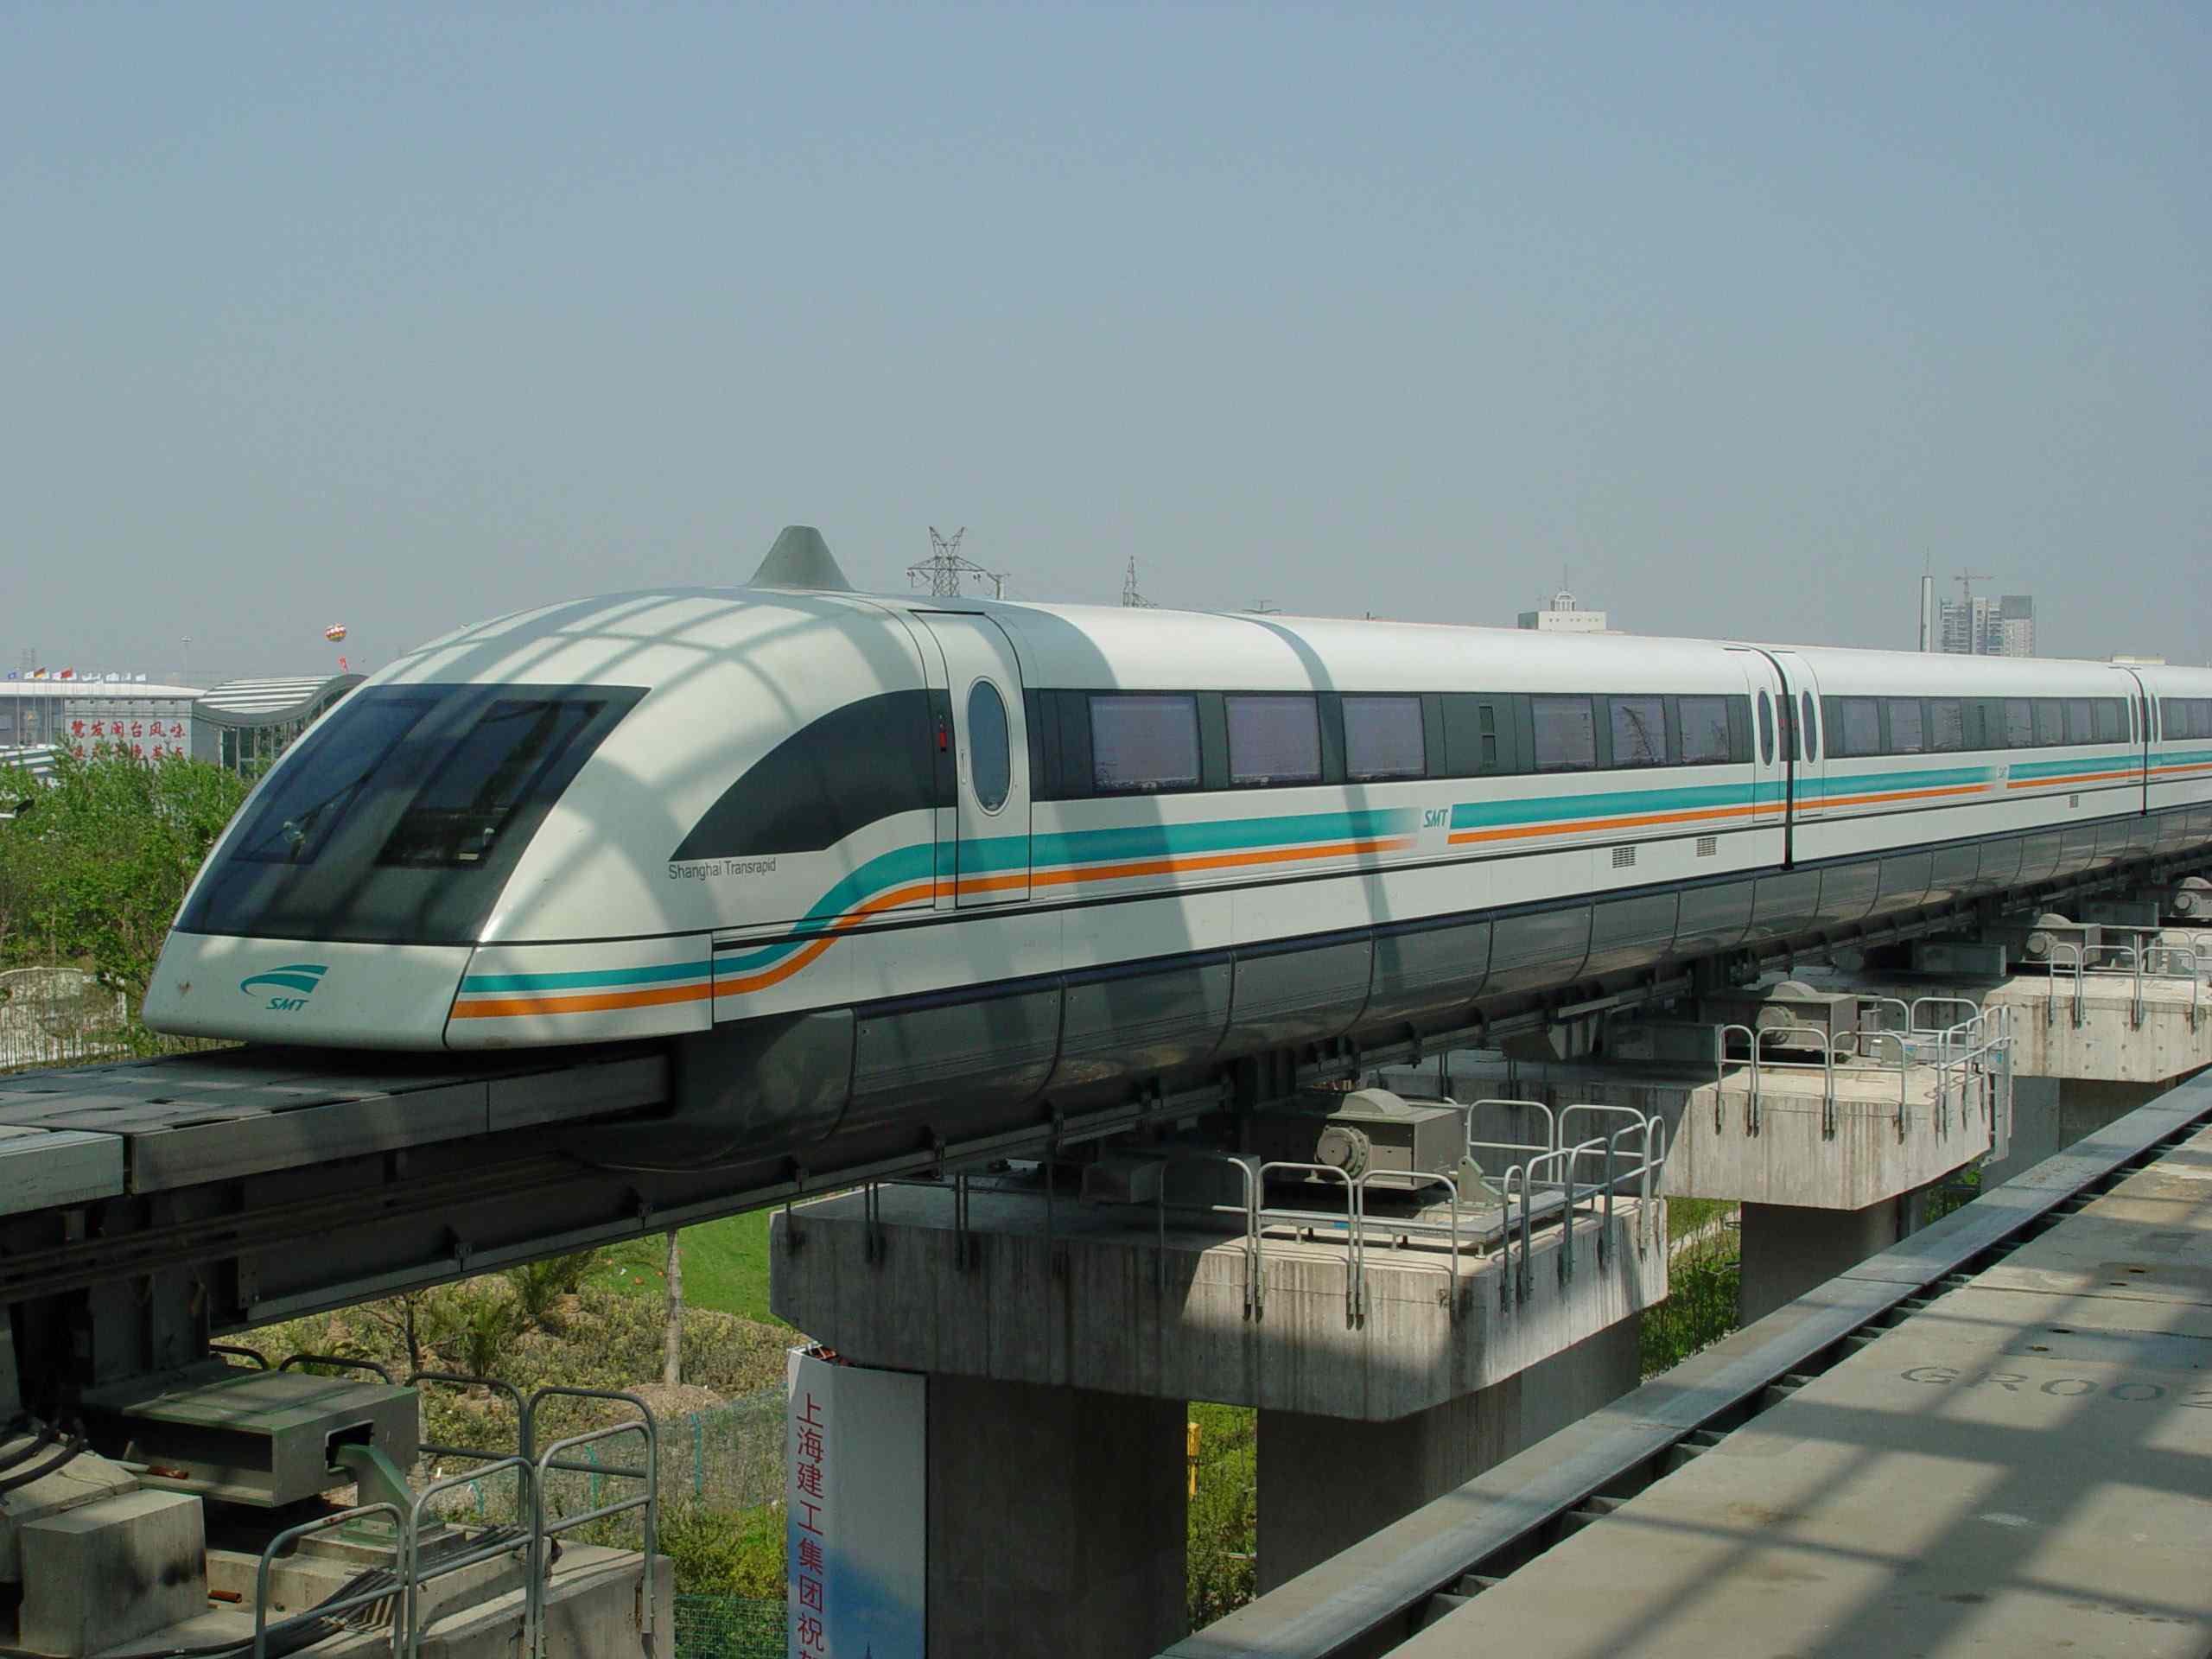 Images Wikimedia Commons/28 Andreas Krebs Shanghai_maglev_train.jpg